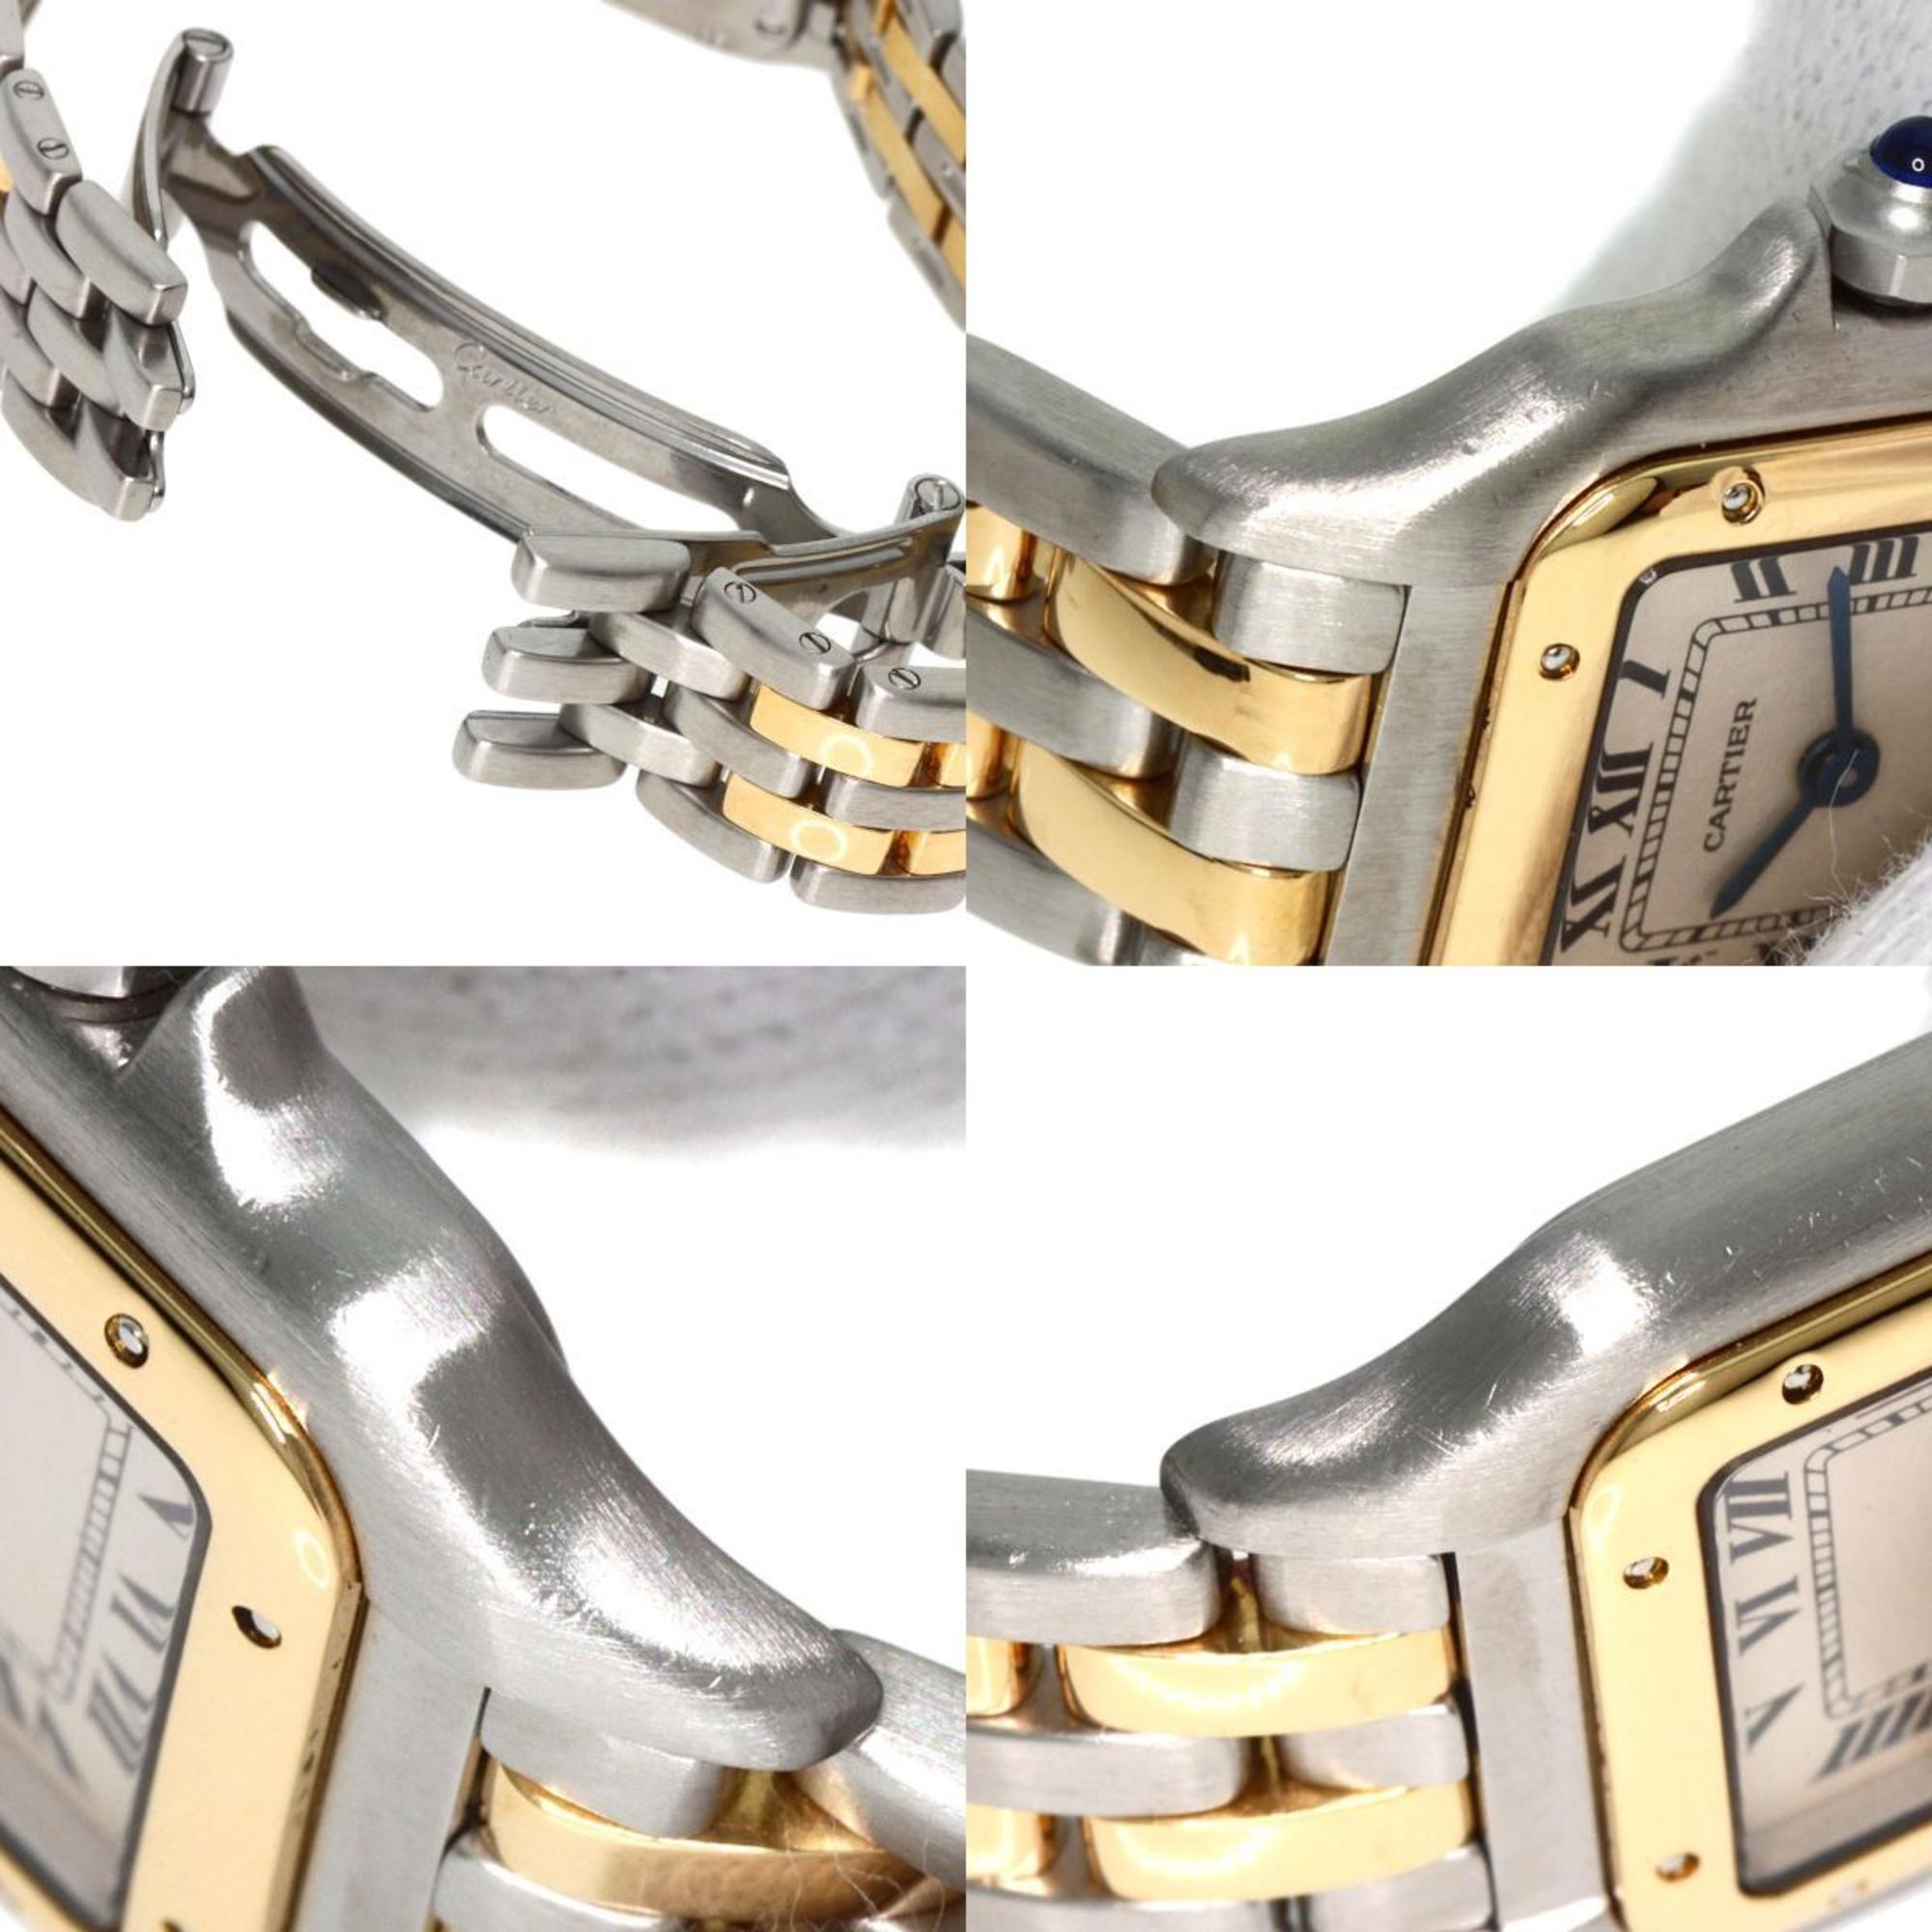 Cartier W25029B6 Panthere SM Manufacturer Complete Watch Stainless Steel/SSxK18YG Women's CARTIER